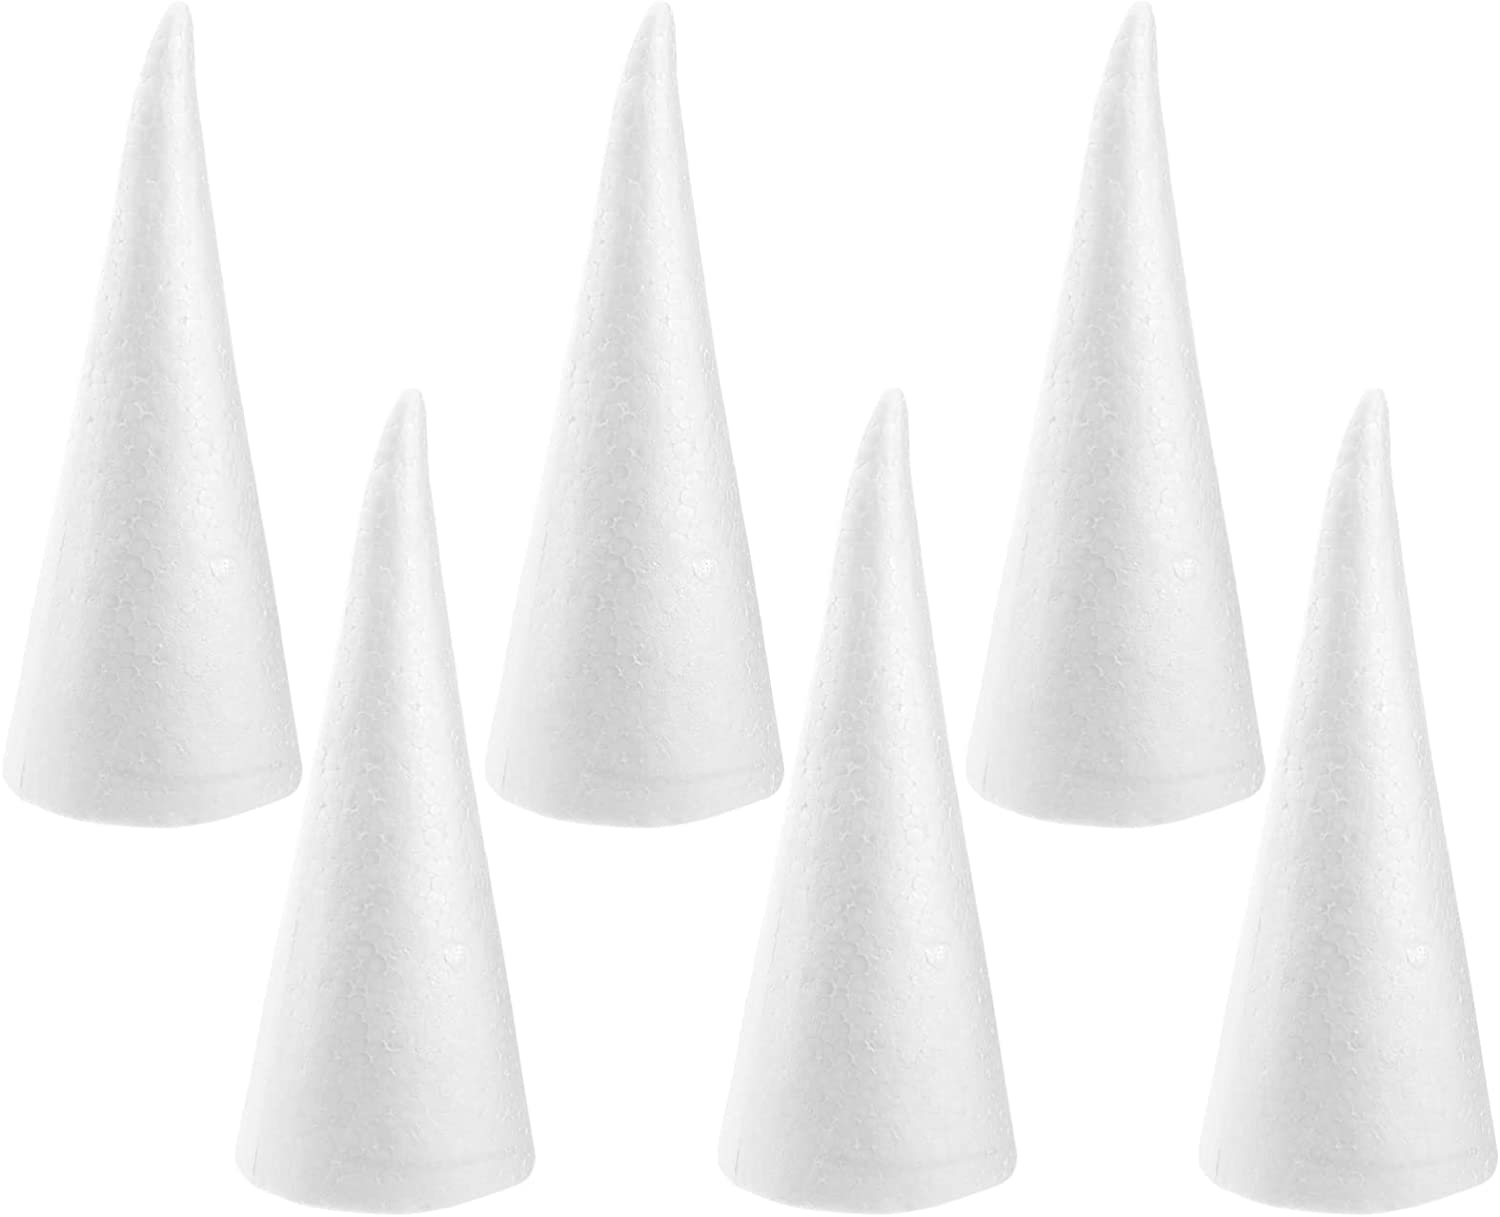  12 Pcs Foam Cones for Crafts 5.9 Inches Cones Arts and